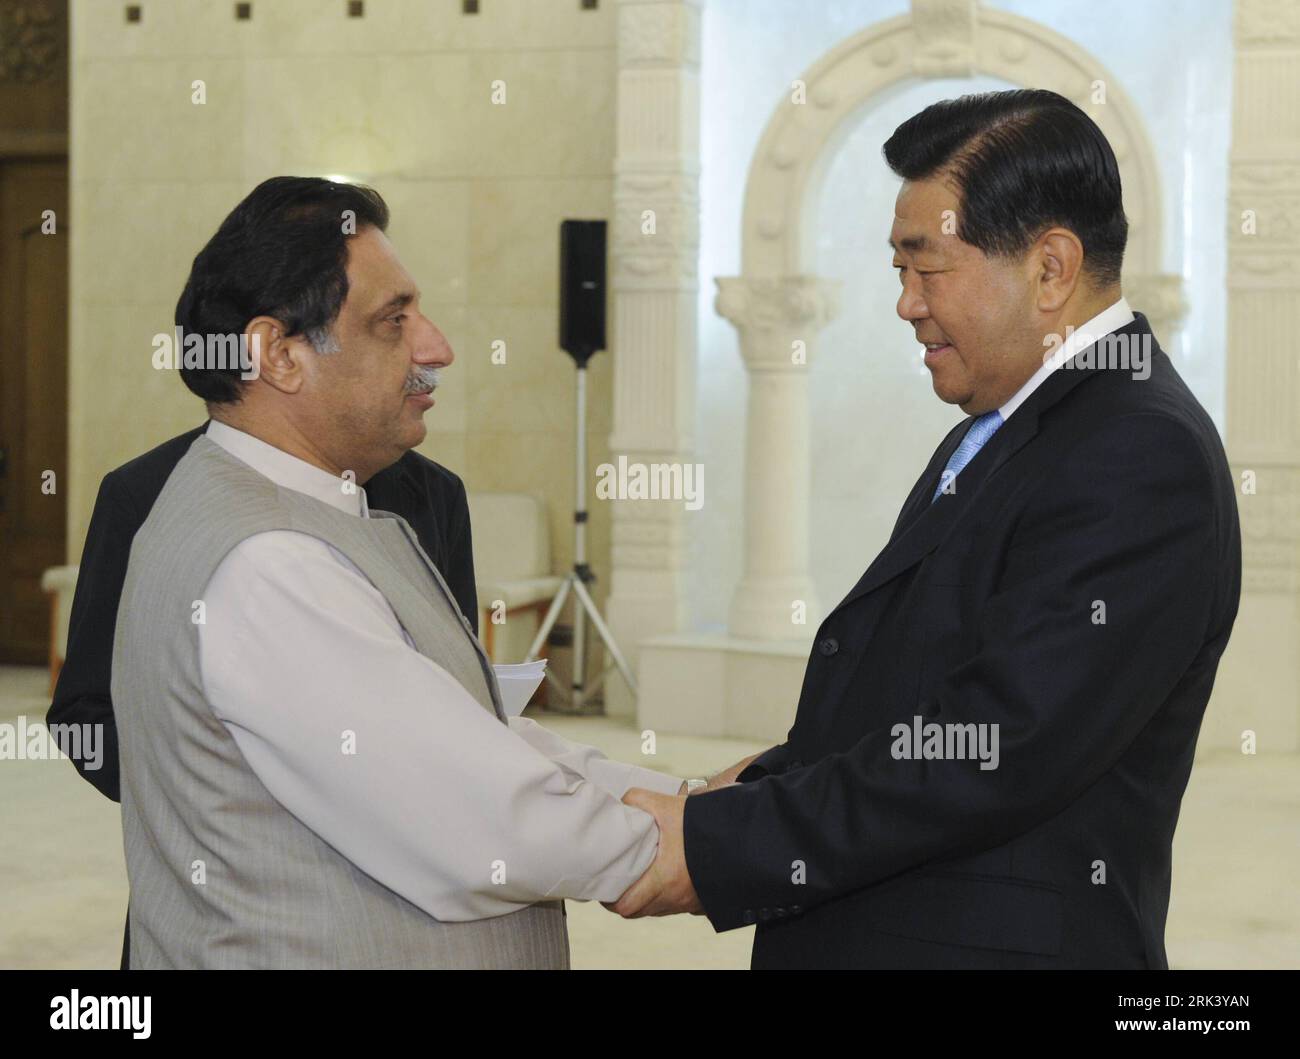 Bildnummer: 53558923  Datum: 27.10.2009  Copyright: imago/Xinhua (091027) -- BEIJING, Oct. 27, 2009 (Xinhua) -- Jia Qinglin (R), chairman of the National Committee of the Chinese People s Political Consultative Conference (CPPCC), meets with Jan Muhammad Khan Jamali, deputy chairman of the Senate of the Islamic Republic of Pakistan, in Beijing, capital of China, on Oct. 27, 2009. (Xinhua/Li Xueren) (wjd) (1)CHINA-BEIJING-PAKISTAN-JIA QINGLIN-JAMALI-MEETING (CN) PUBLICATIONxNOTxINxCHN People Politik Kbdig xdp 2009 quer premiumd    Bildnummer 53558923 Date 27 10 2009 Copyright Imago XINHUA  Beij Stock Photo